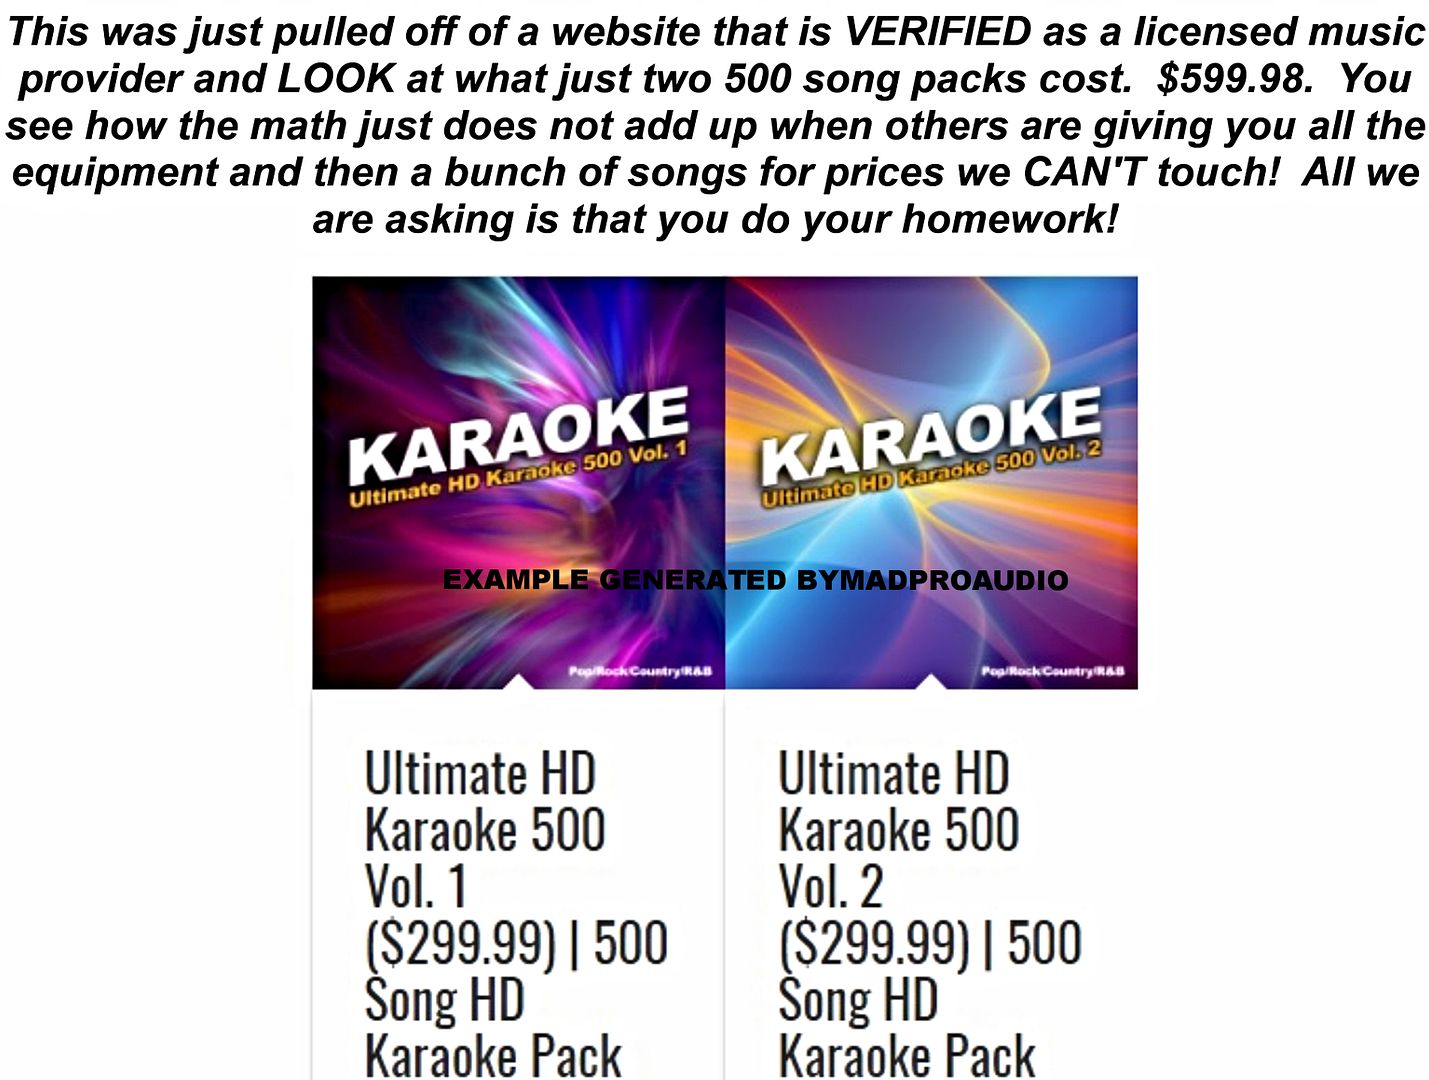 Free karaoke music is NOT free by Madproaudio